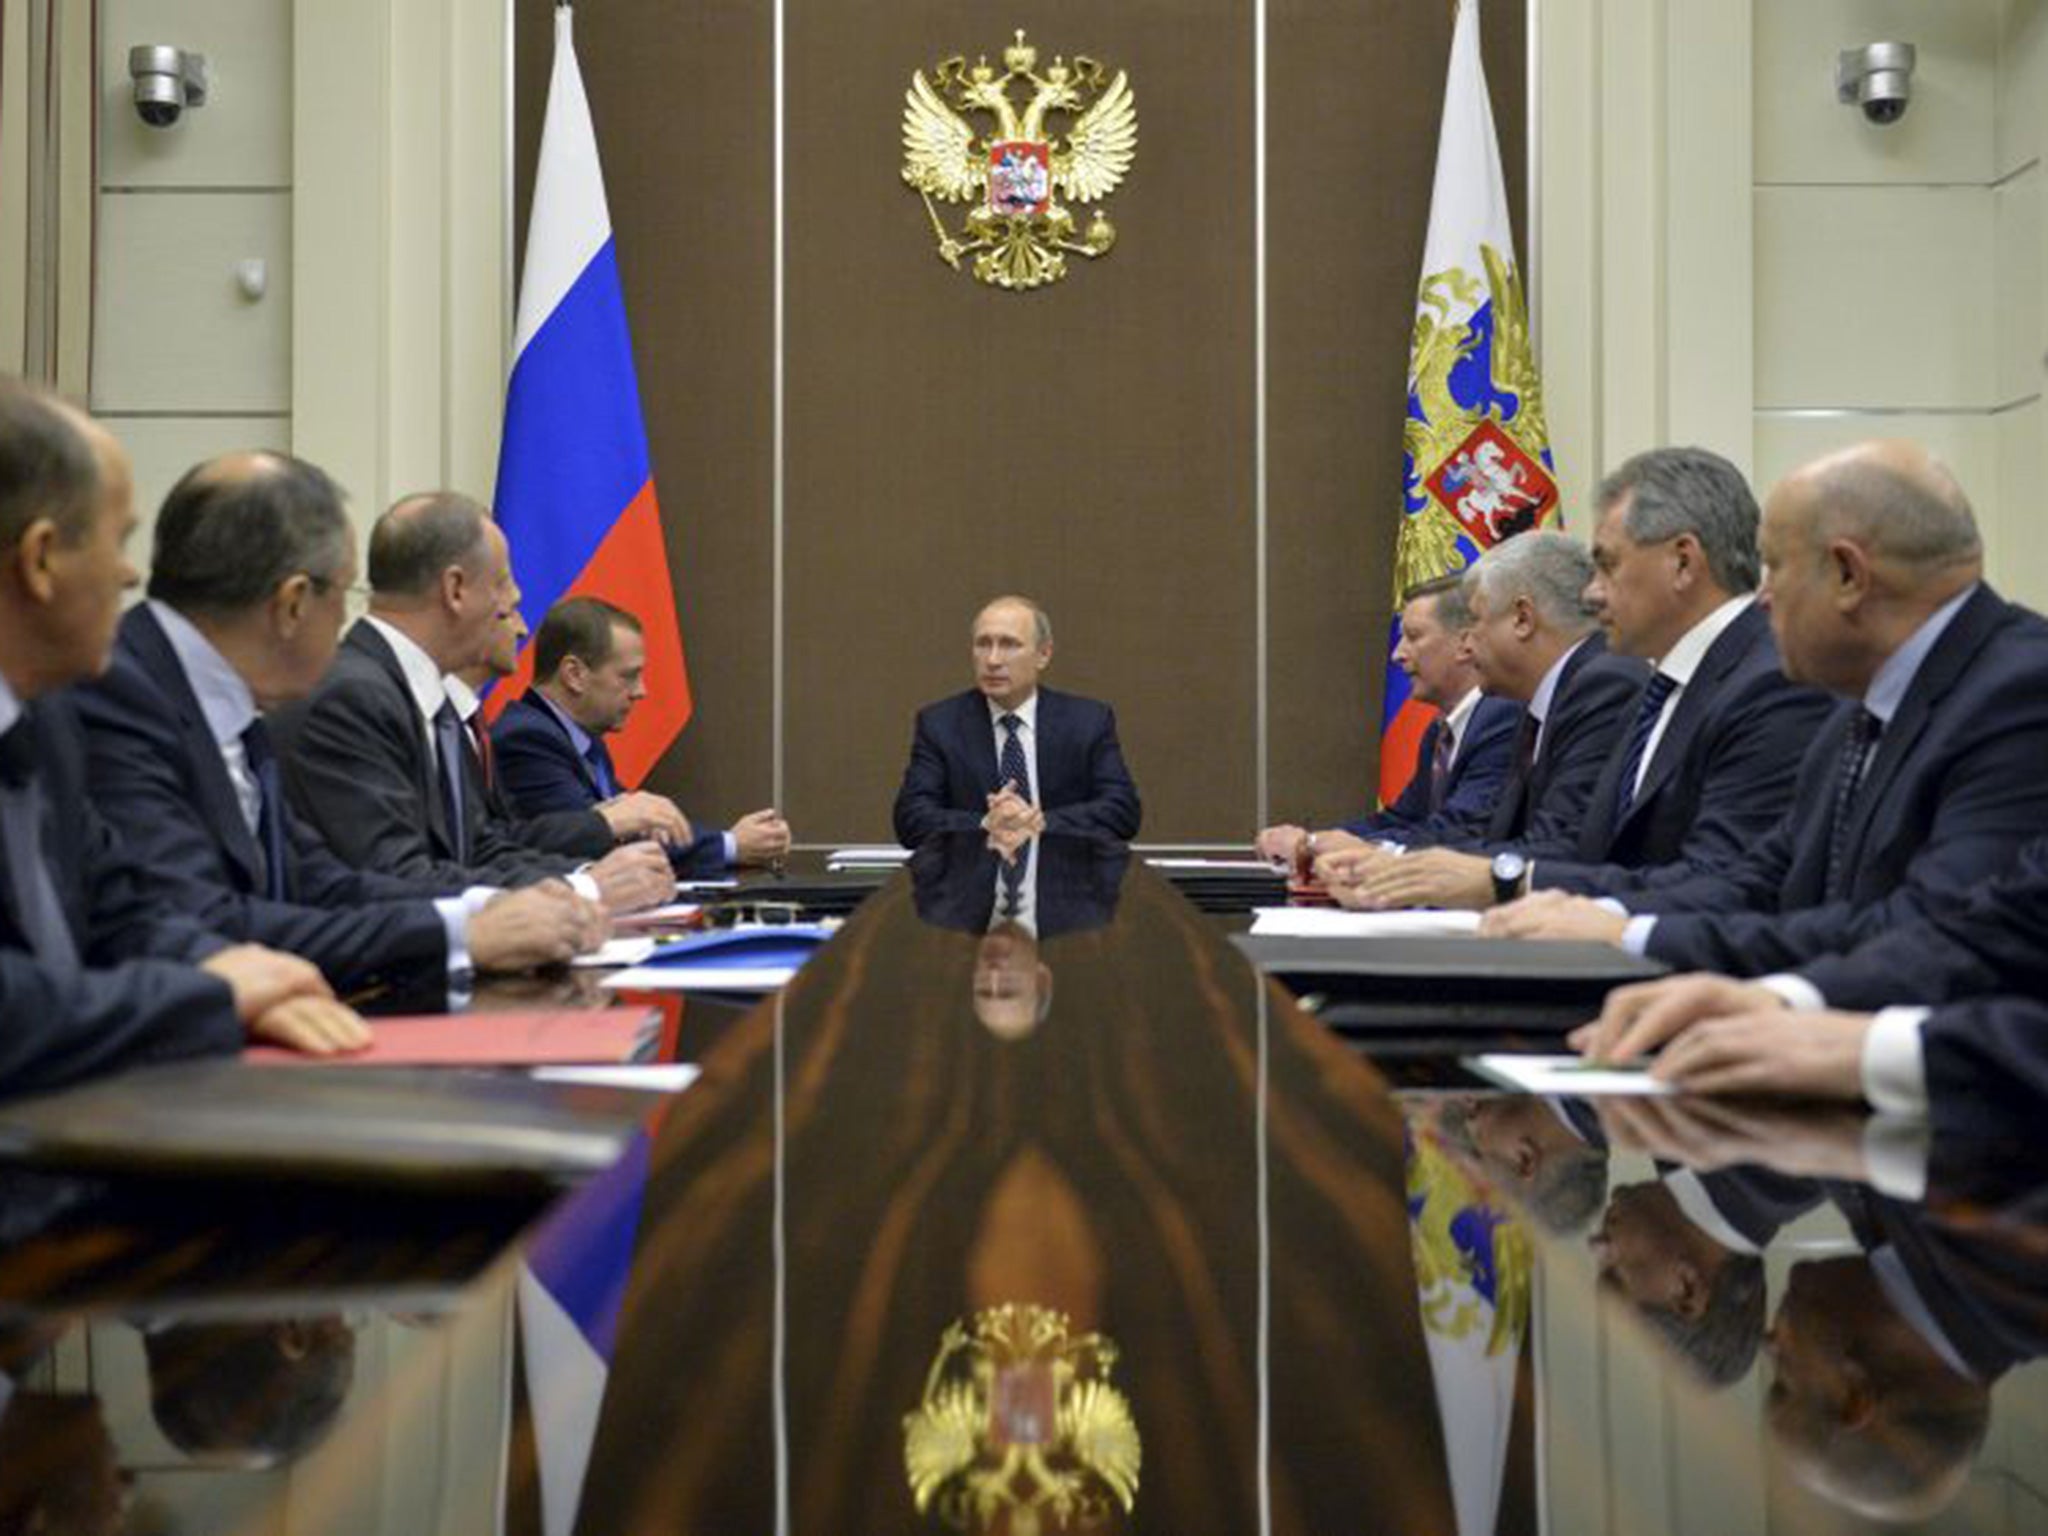 Russian President Vladimir Putin chairs a Security Council meeting